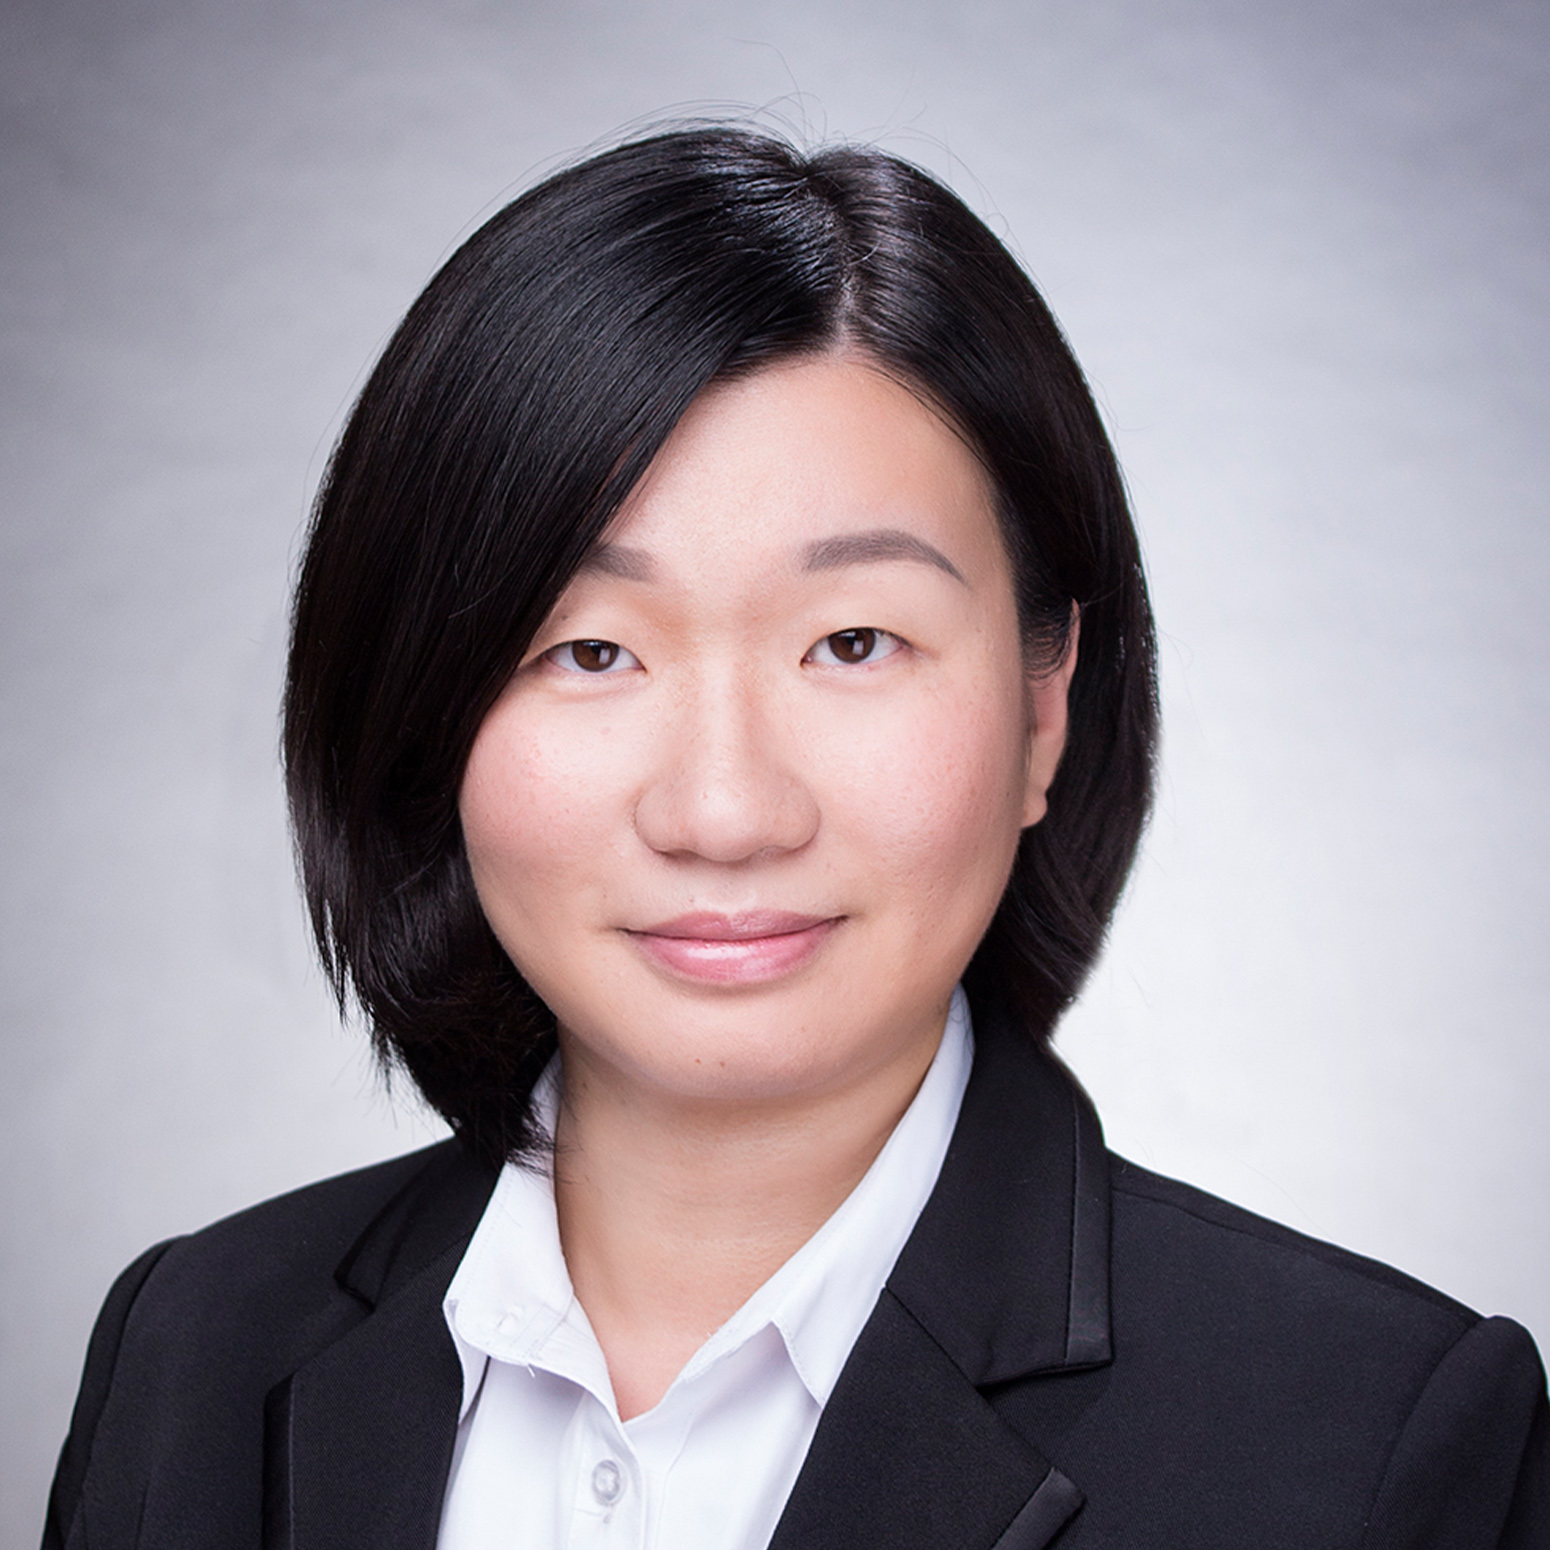 Professor Felicia Tian